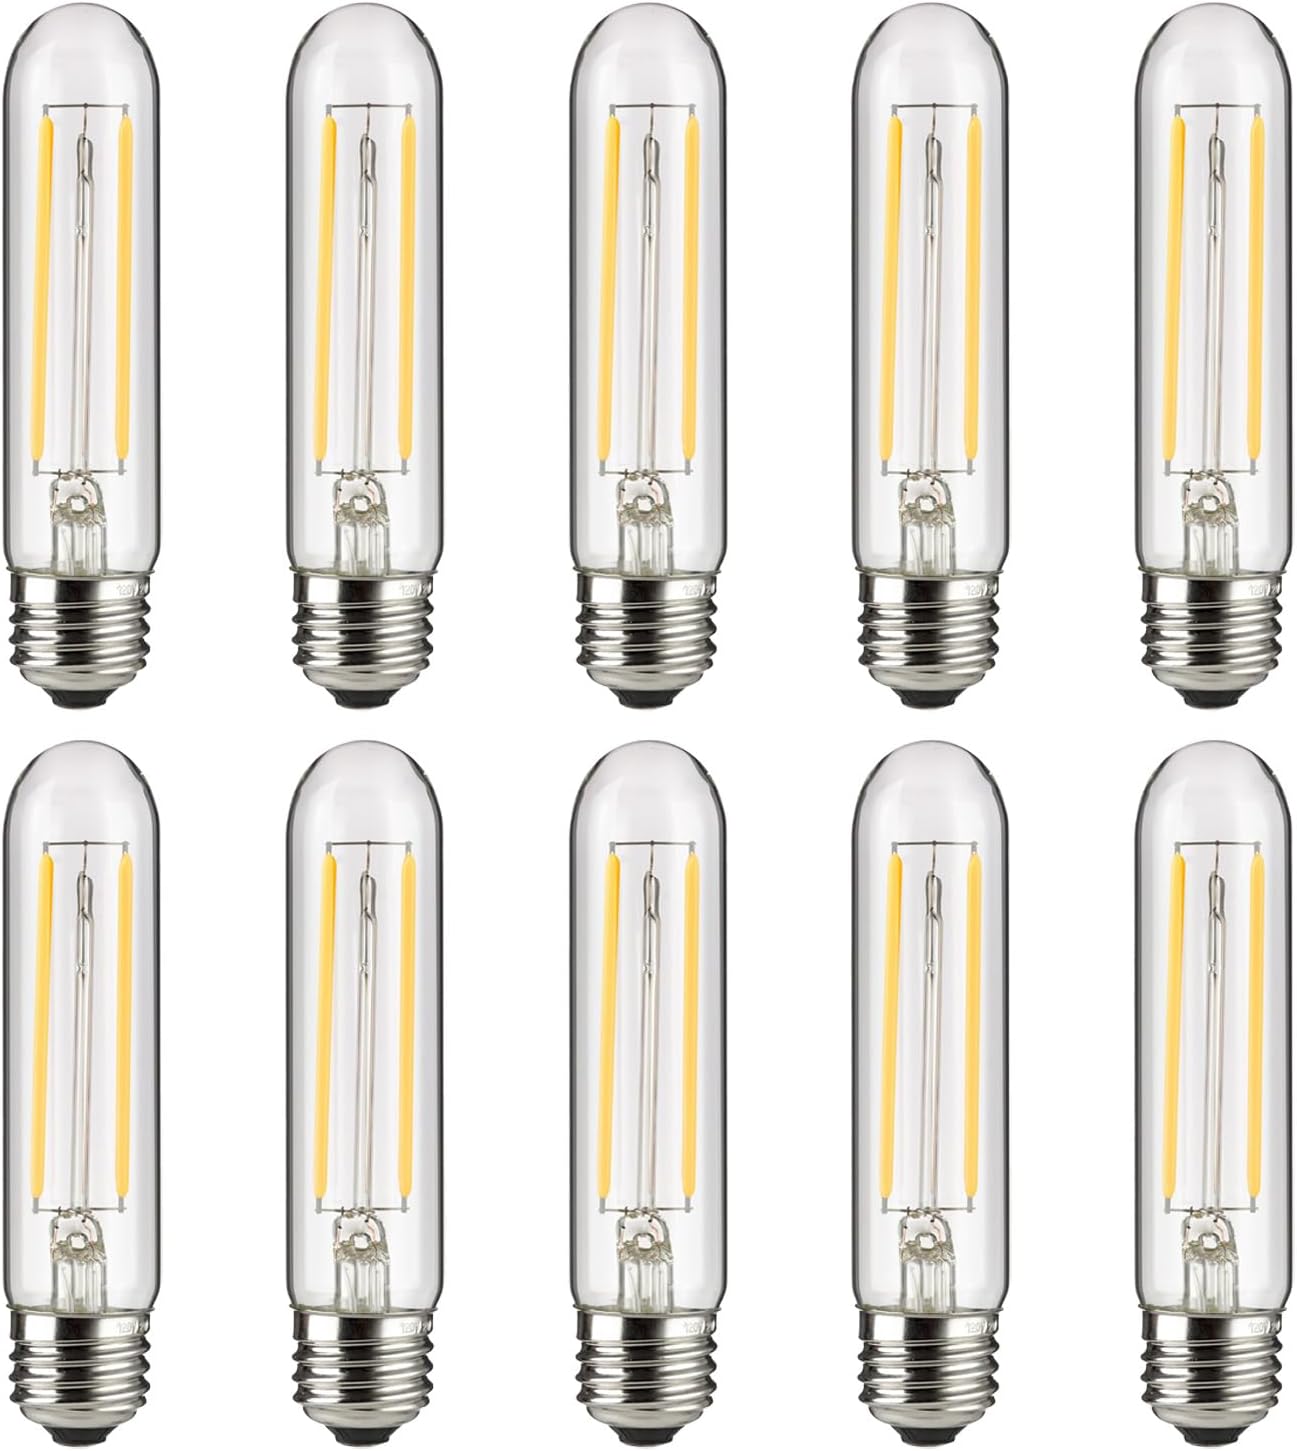 Sunlite LED Filament T10 Tubular Light Bulb, 2 Watts (25W Equivalent), 160 Lumens, Medium E26 Base, 120 Volts, Dimmable, 90 CRI, UL Listed, Clear, 2700K Soft White, 10 Pack